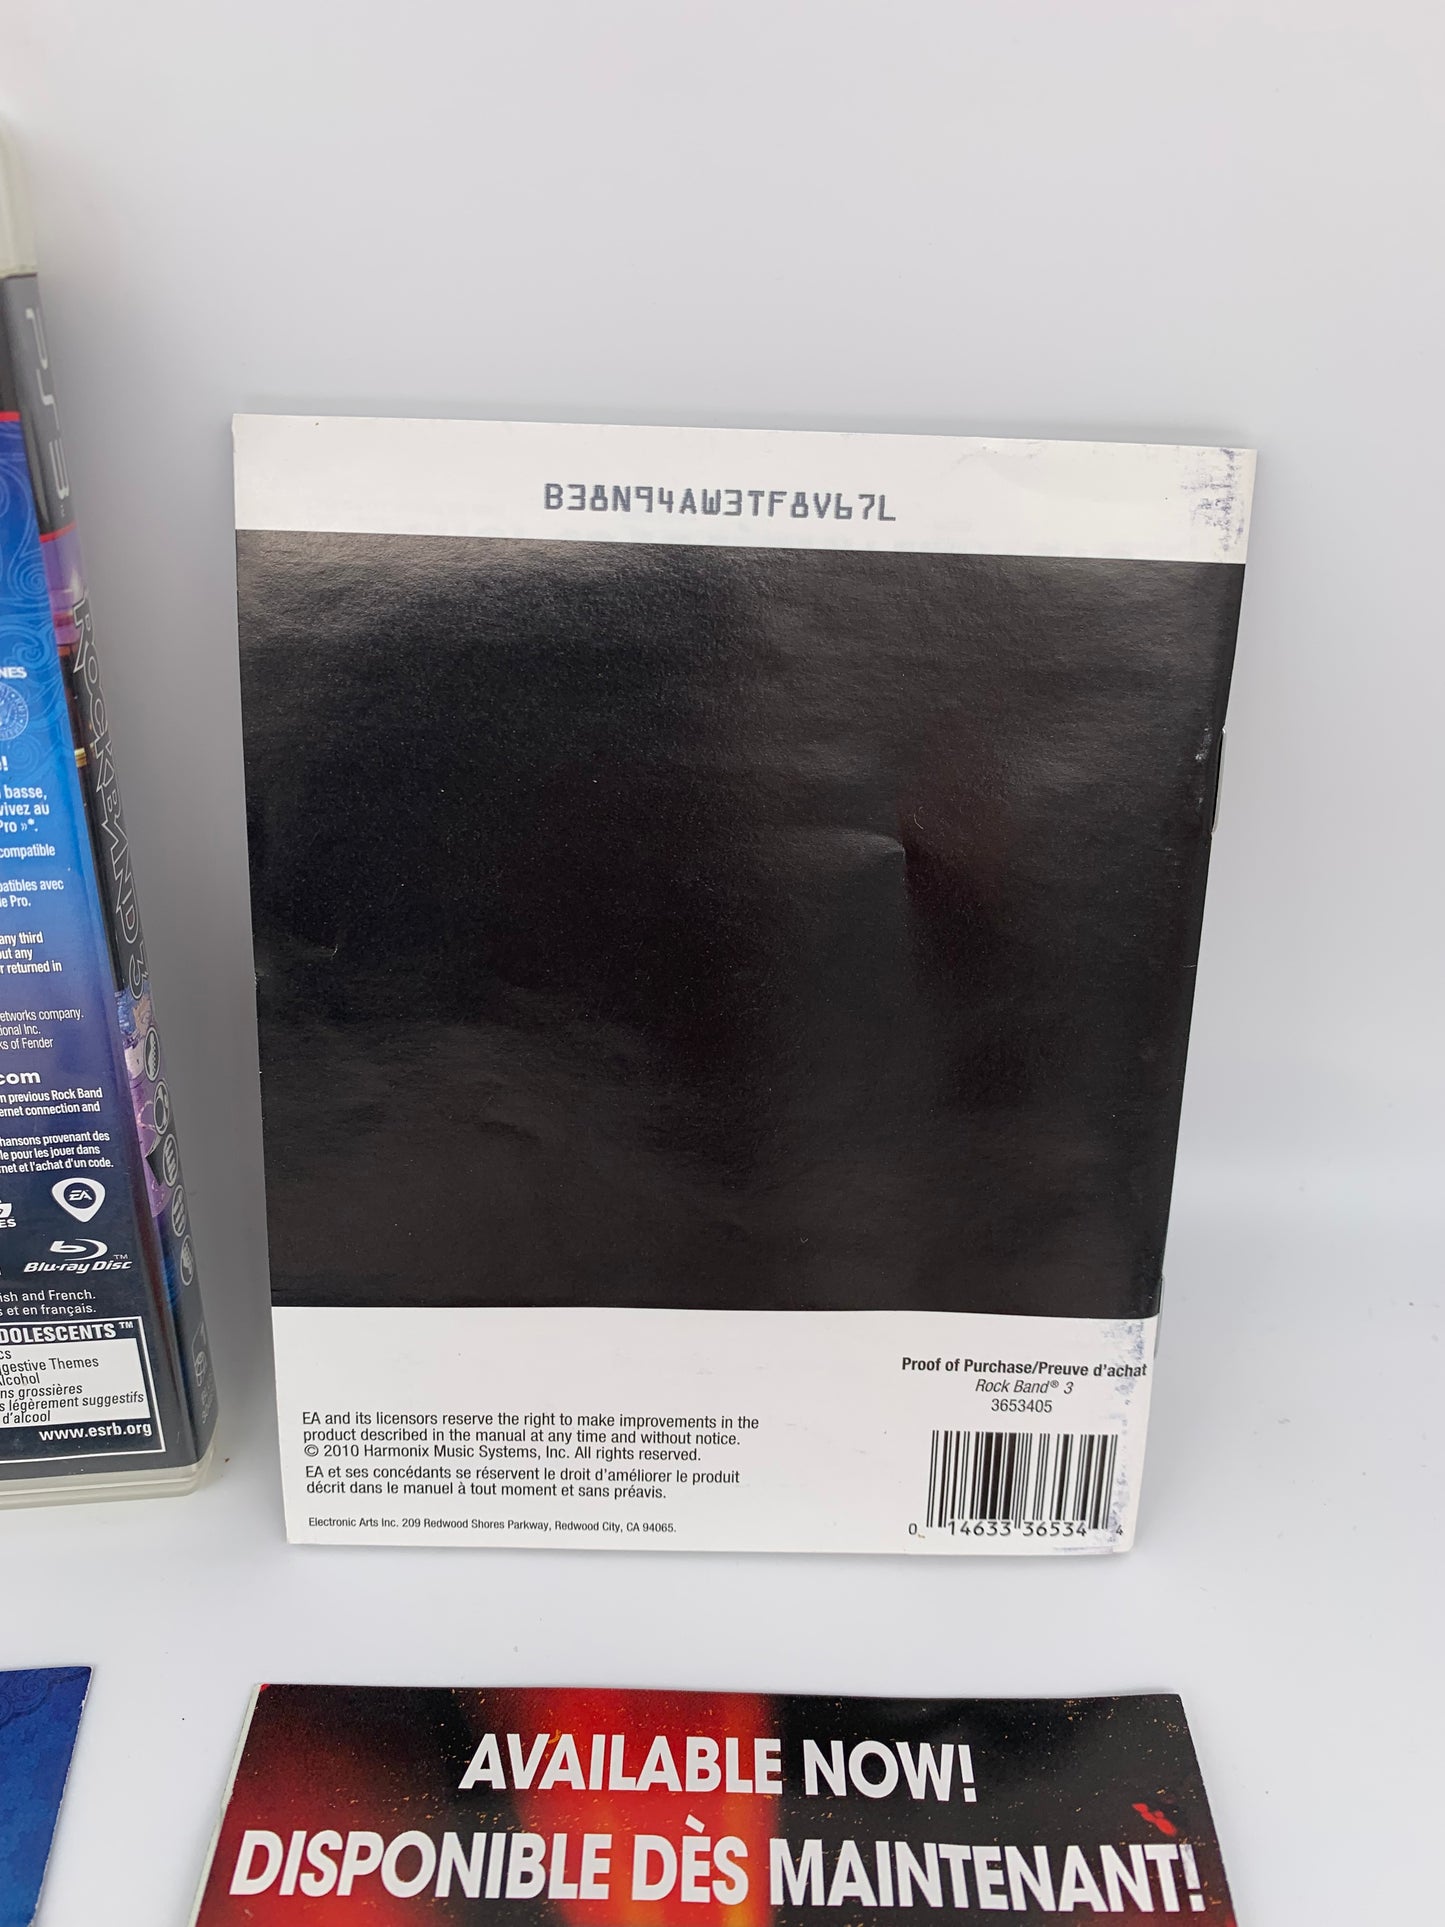 SONY PLAYSTATiON 3 [PS3] | ROCK BAND 3